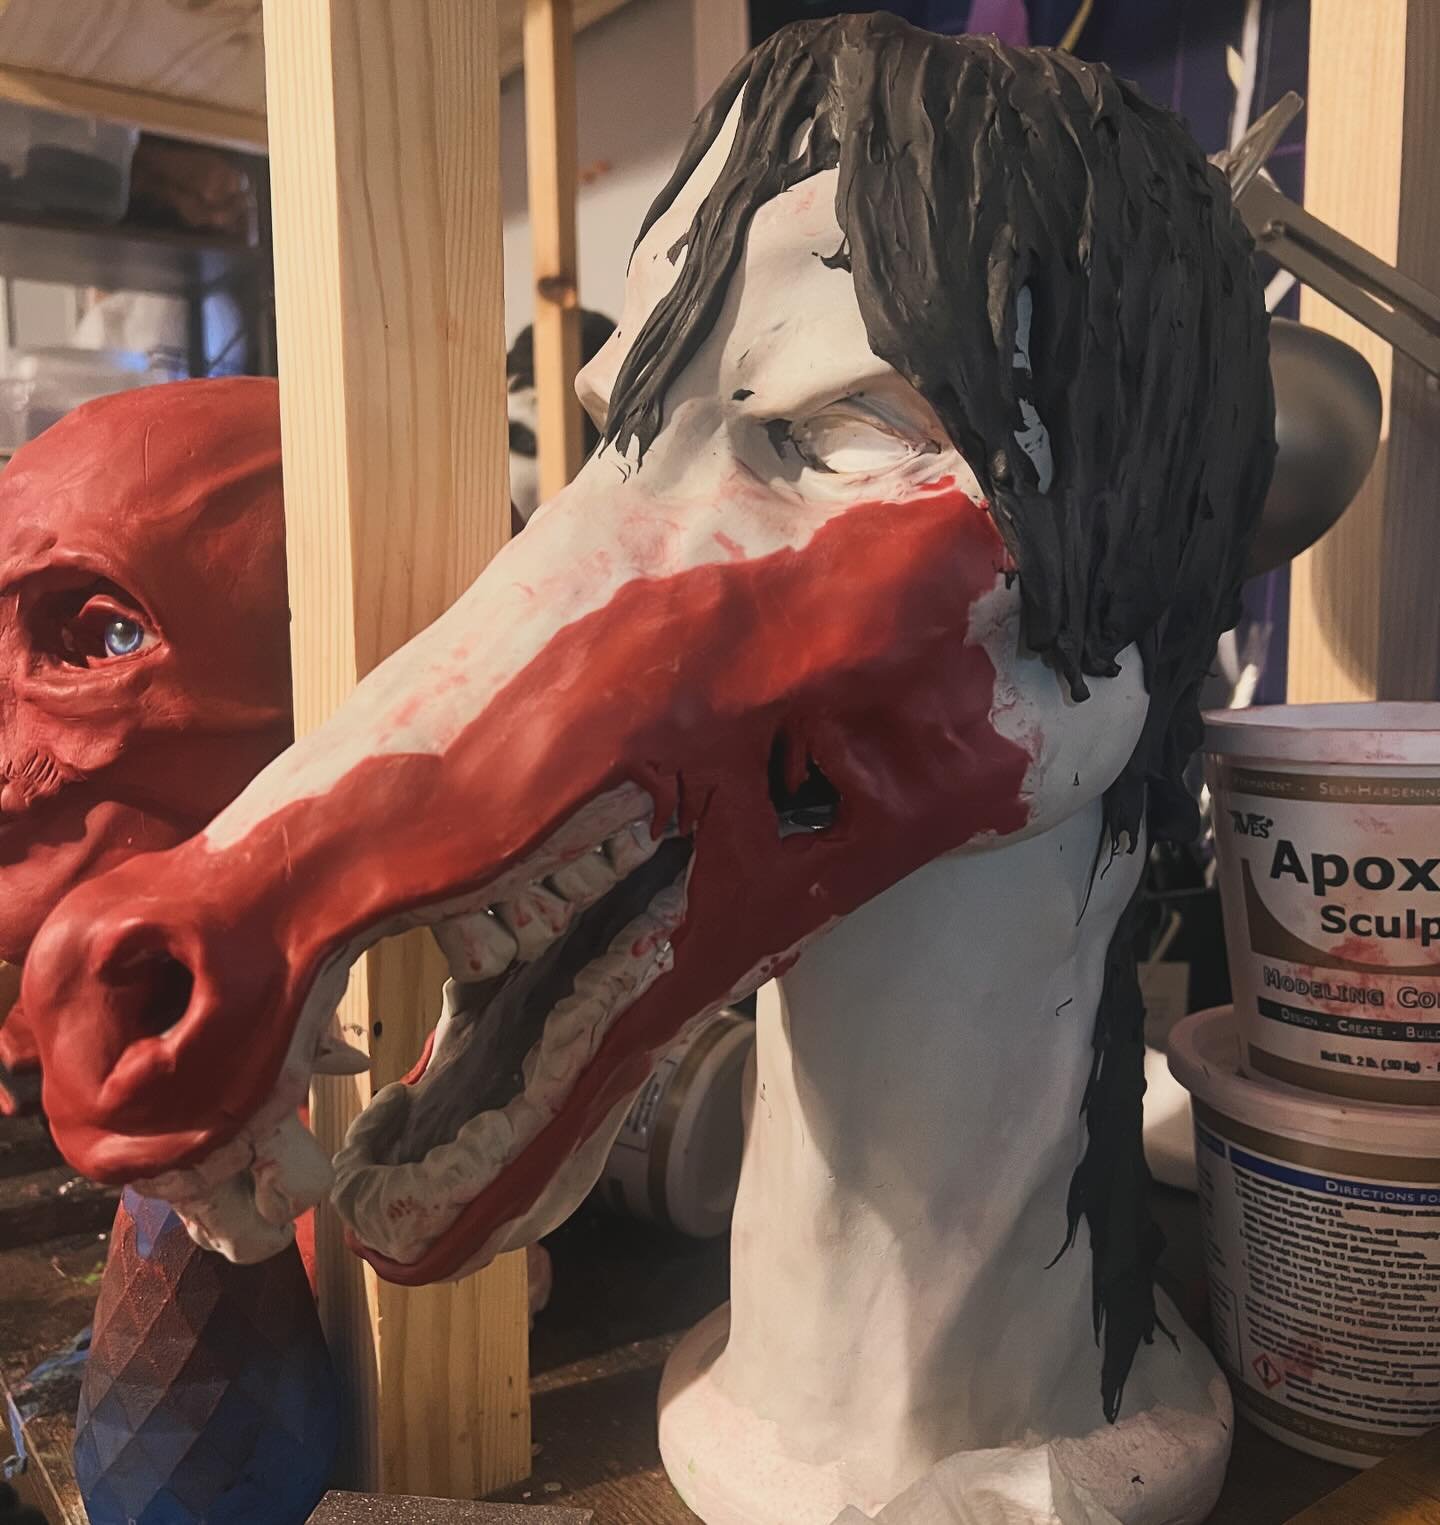 More progress on the Kelpie! 
.
.
#waterhorse #sculpture #sculptor #horrorart #horrorartwork #indieartist #wip #dndfanart #dungeonsanddragons #warhammercommunity #sfxartist #sfx #prop #propmaker #propmaking